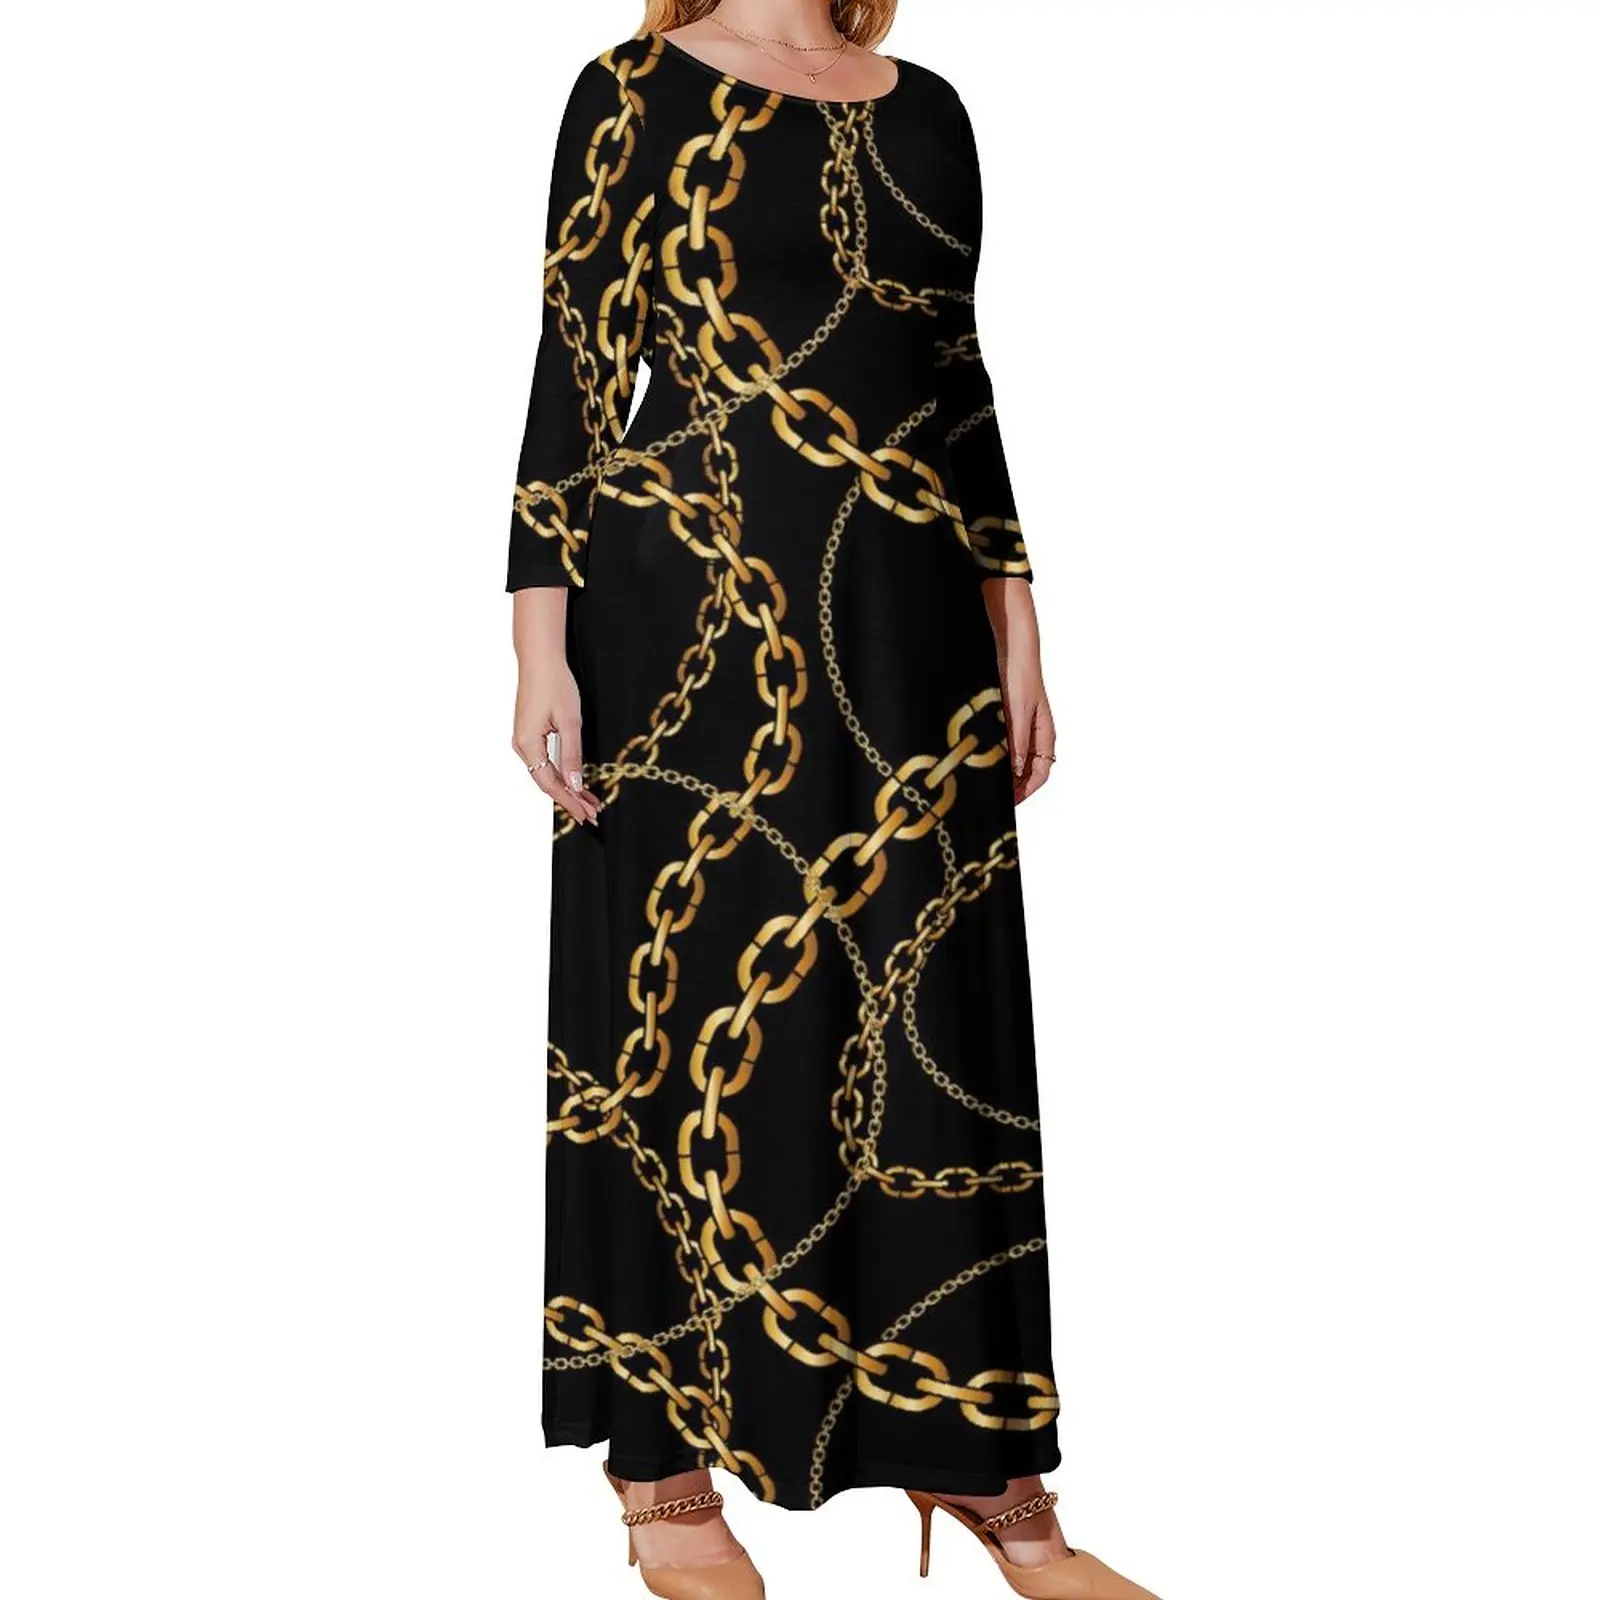 Gold Chains Dress Long Sleeve Circle Chain Print Cute Maxi Dress Daily Street Wear Print Bohemia Long Dresses Plus Size 4XL 5XL